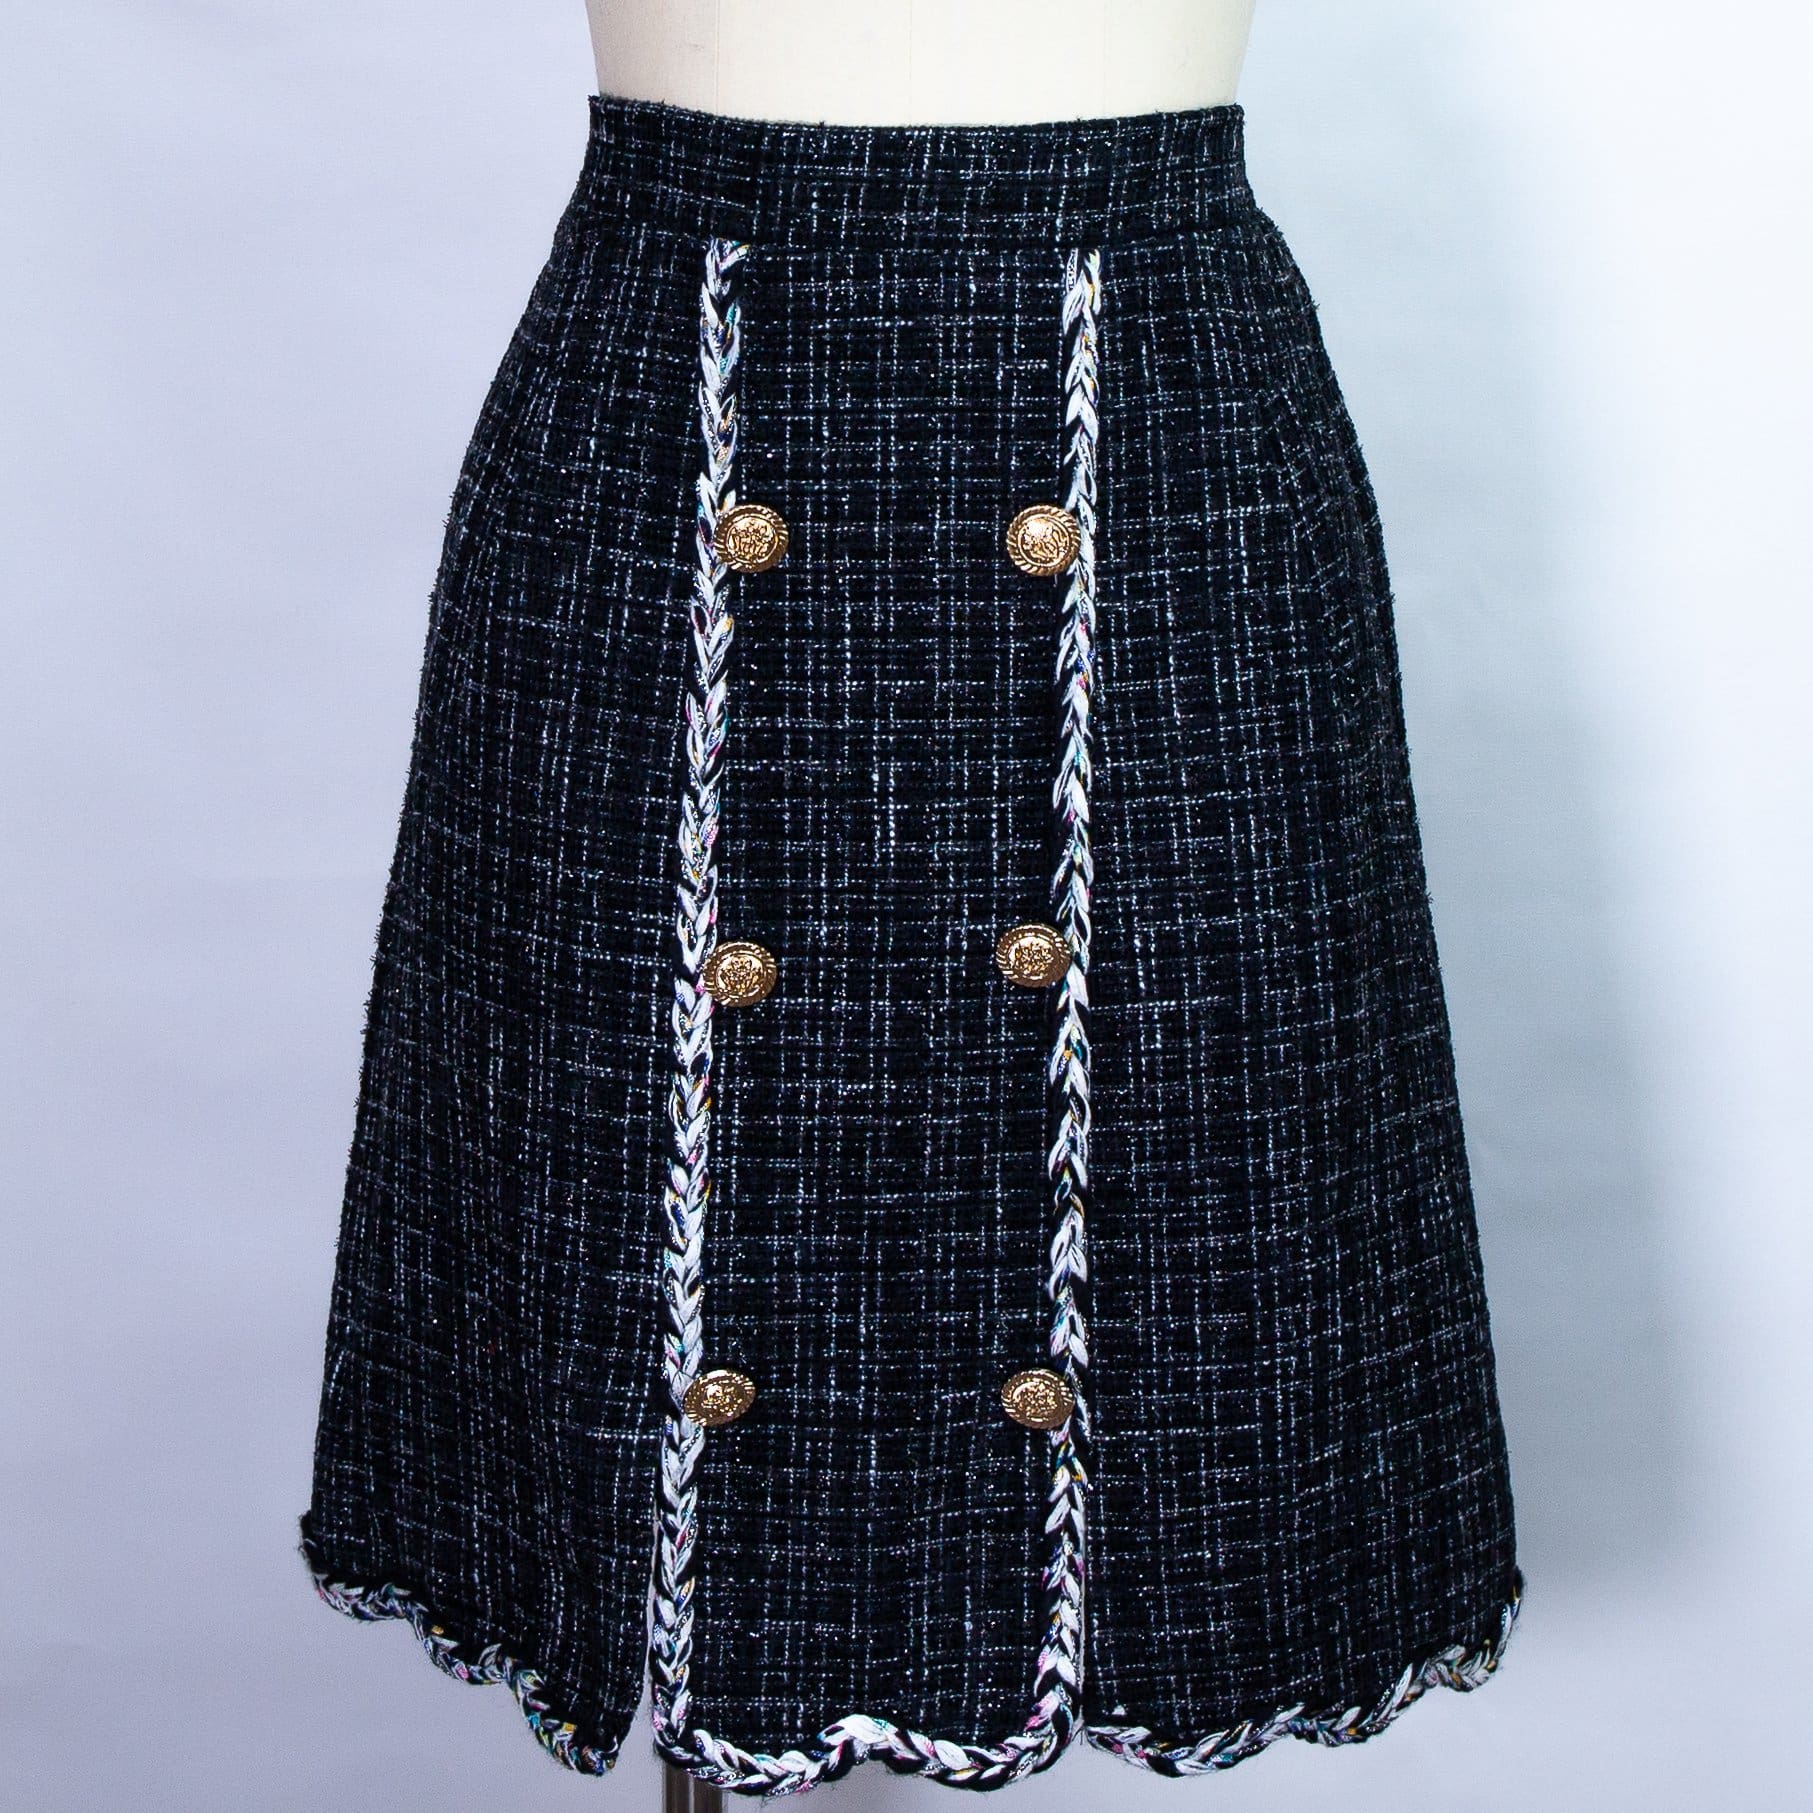 Studio black Typhoon skirt - Skirts